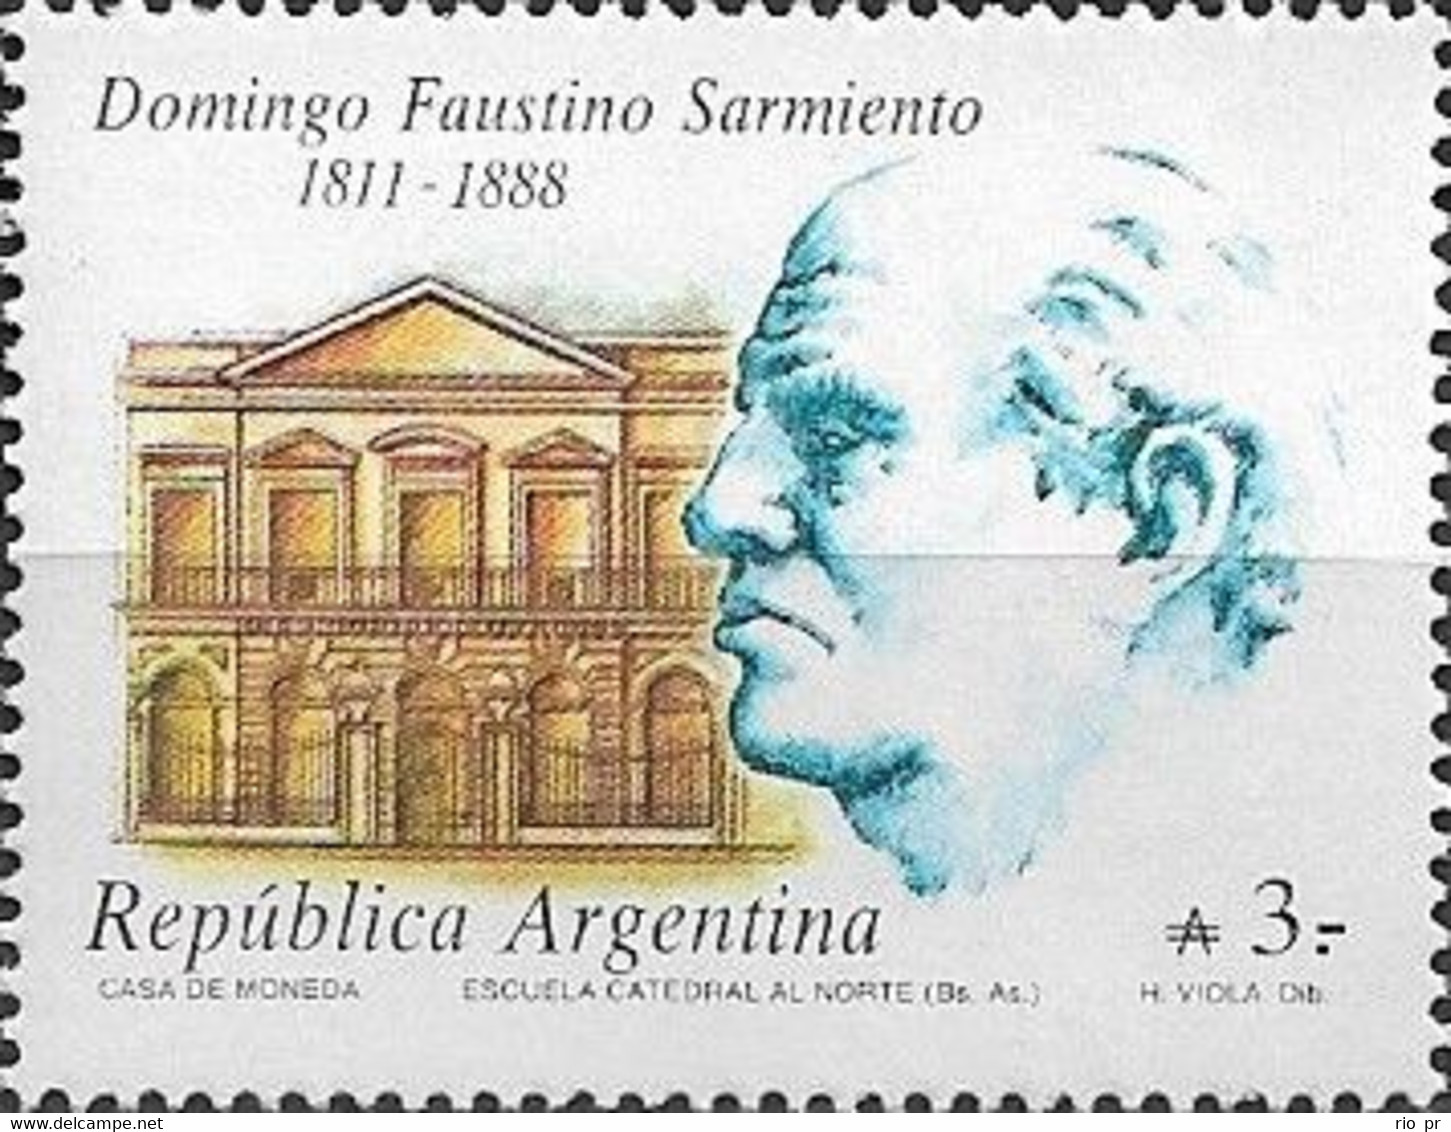 ARGENTINA - DEATH CENTENARY OF DOMINGO FAUSTINO SARMIENTO (1811-1888), ARGENTINE ACTIVIST/STATESMAN 1988 - MNH - Ongebruikt